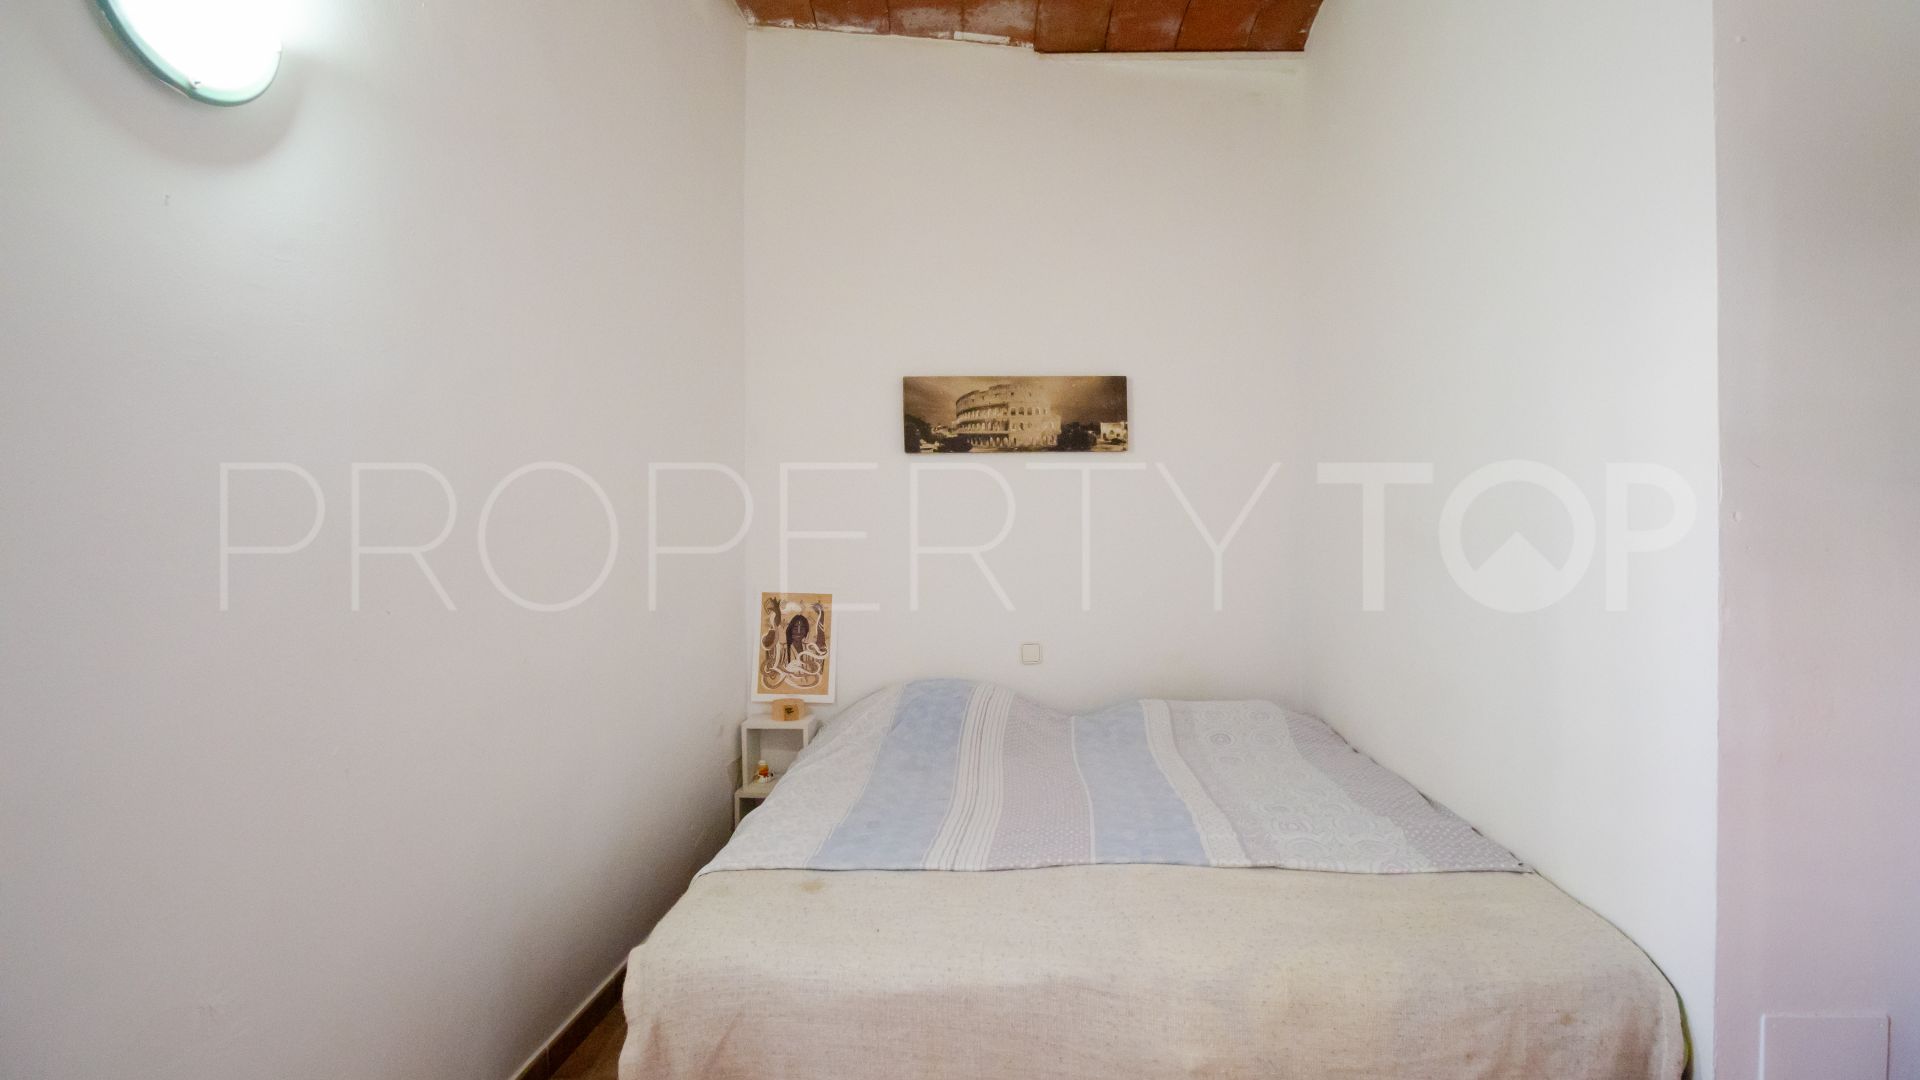 2 bedrooms apartment for sale in Dalt Vila